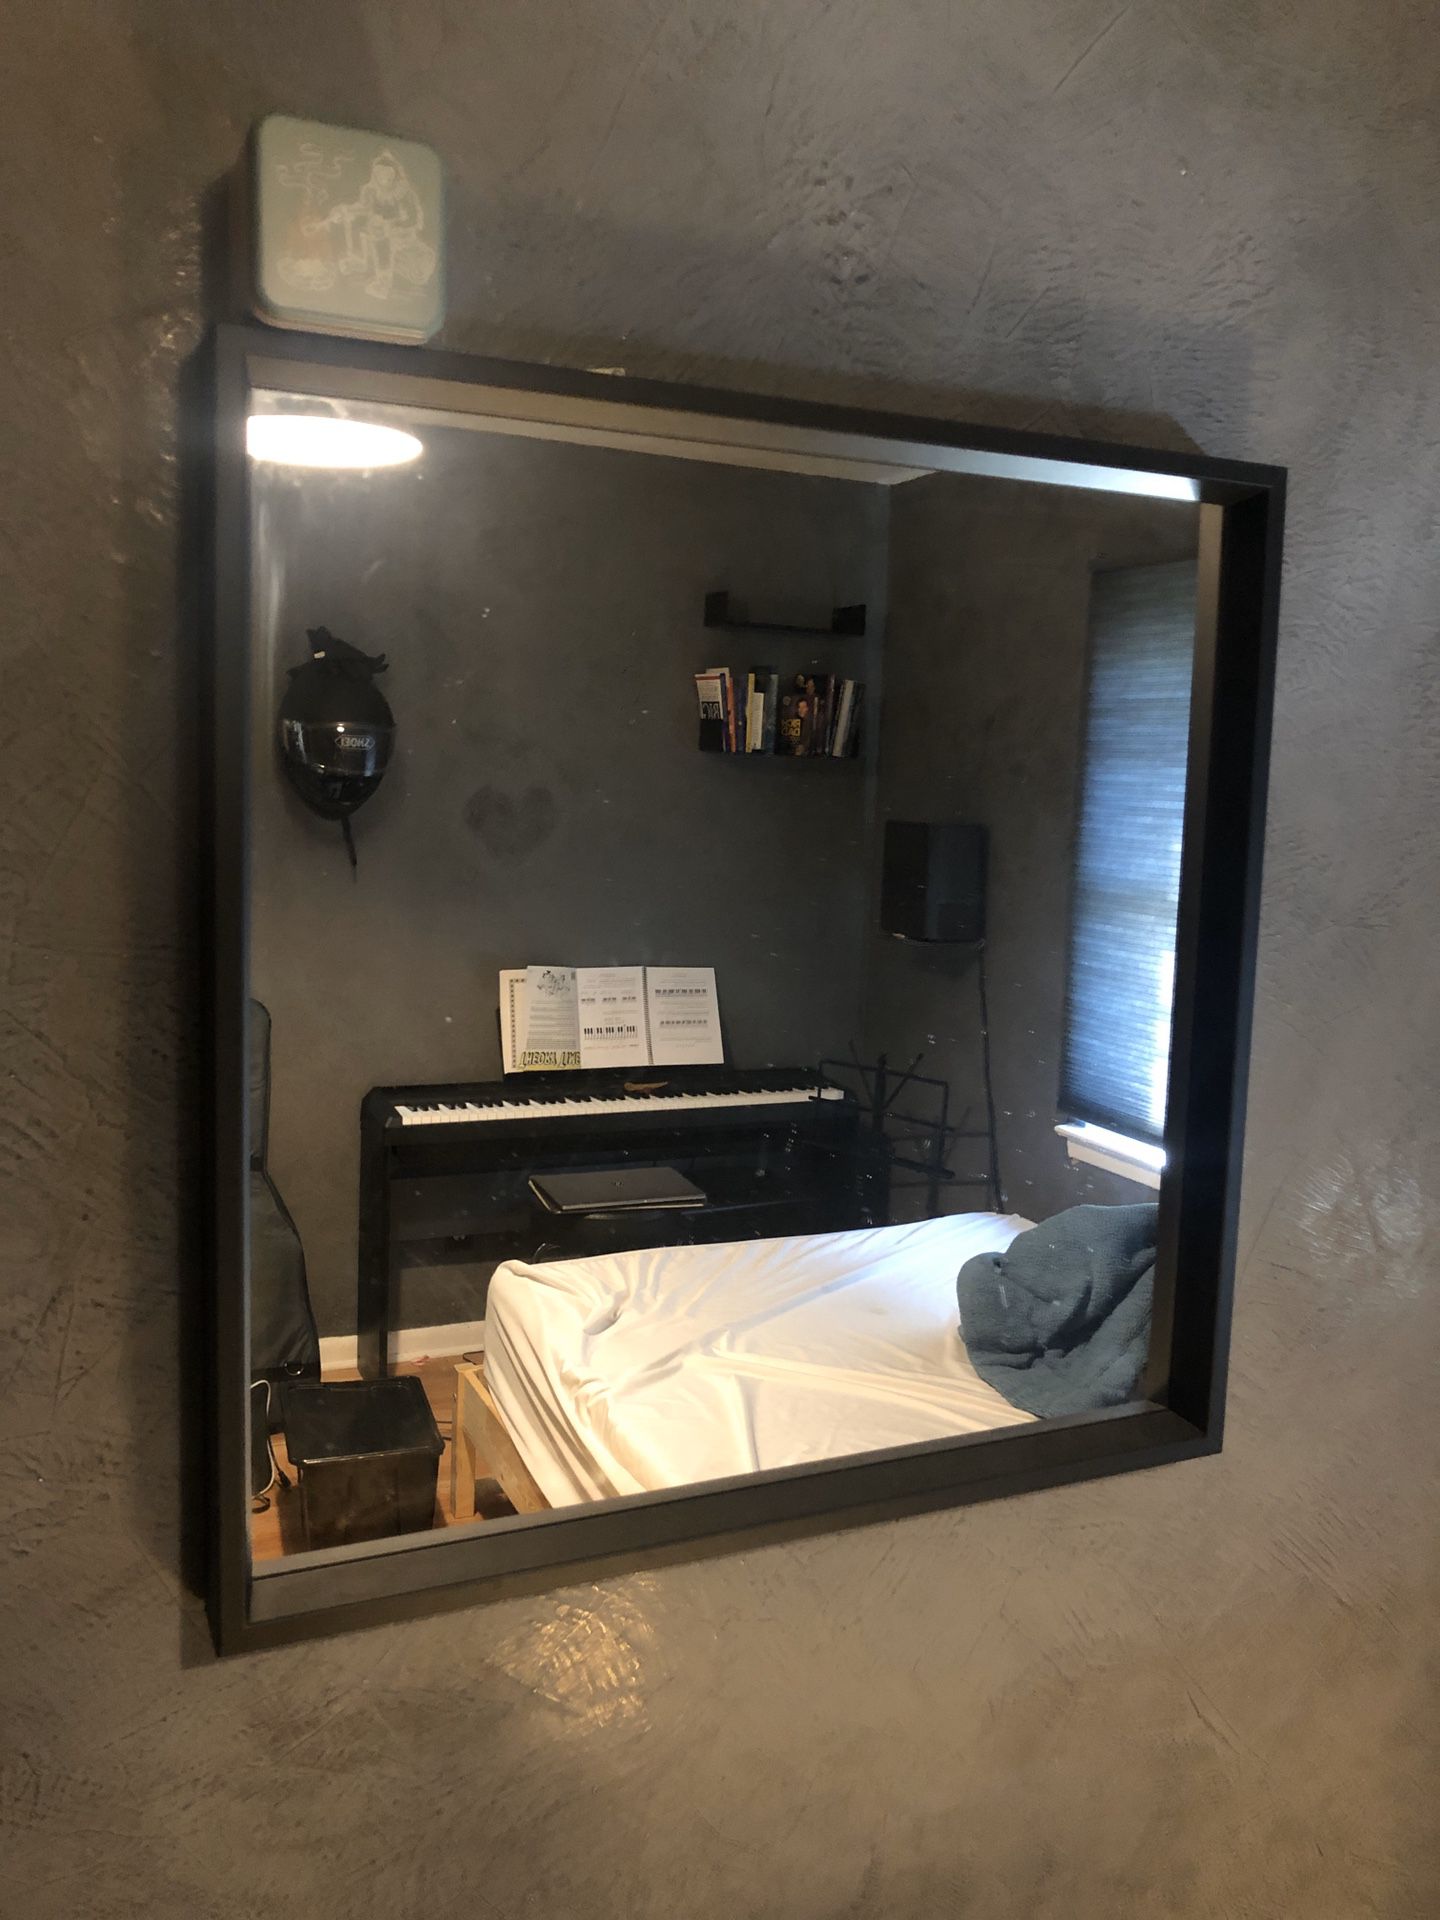 24 x 24 wall mirror